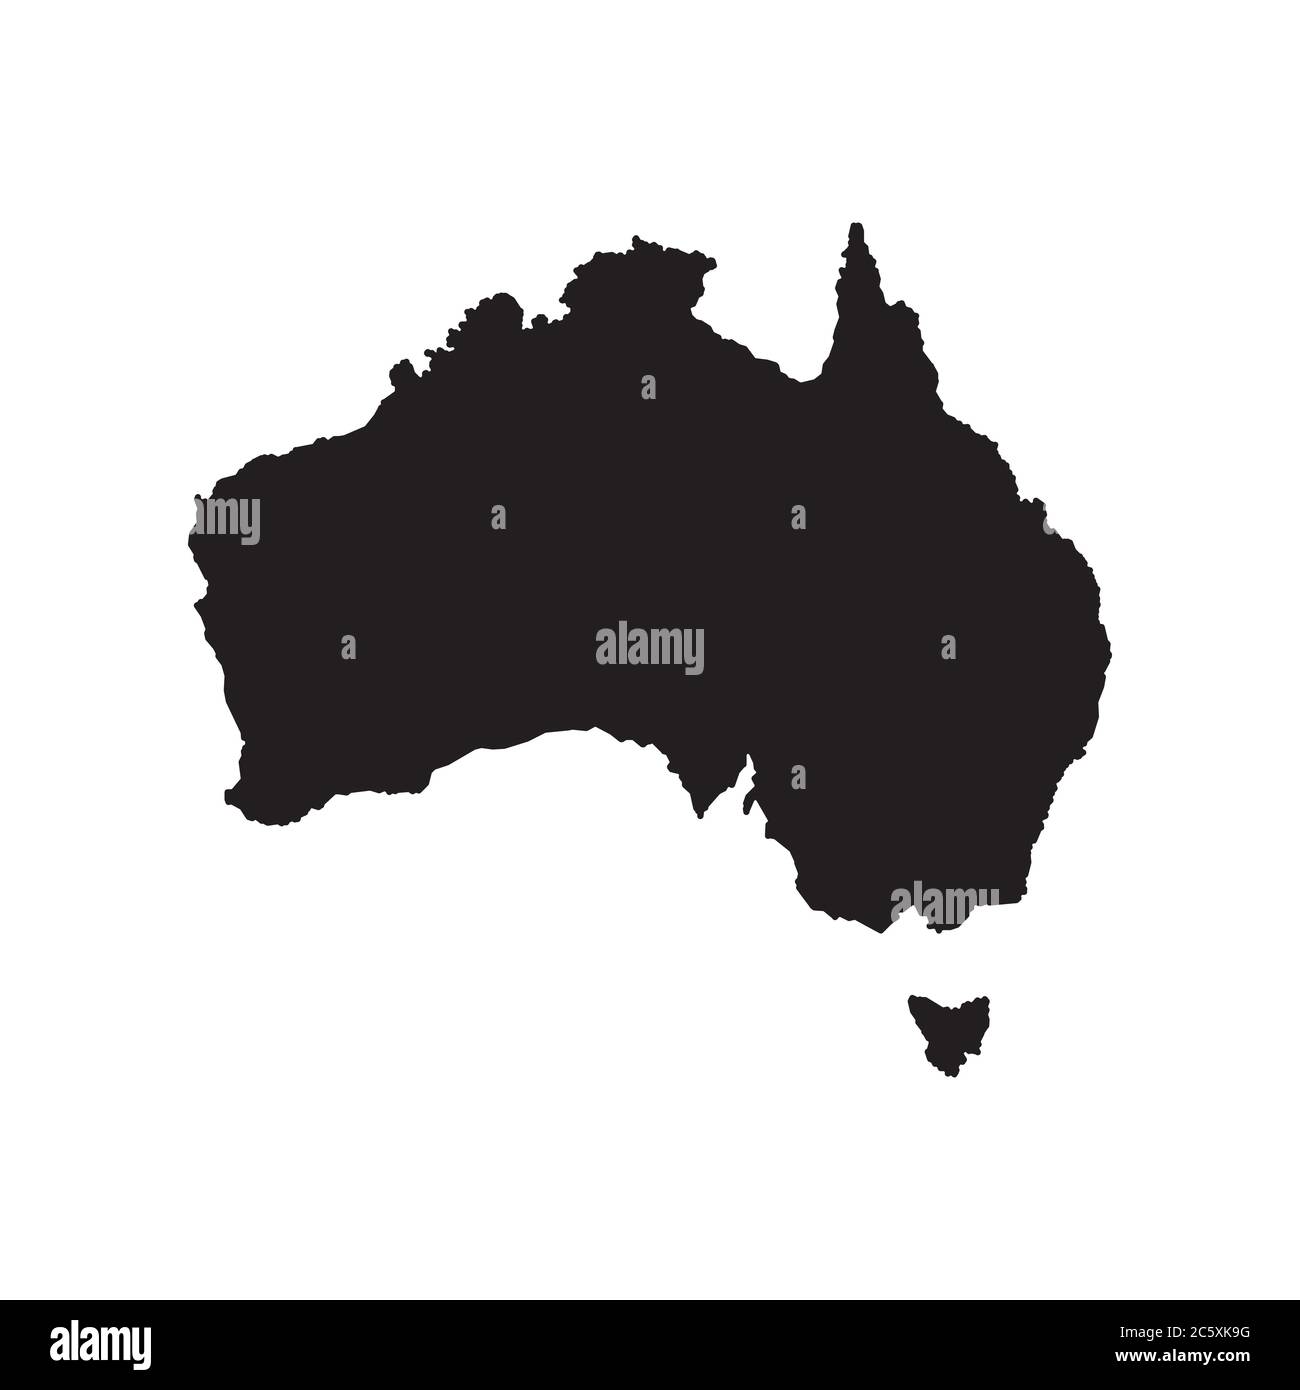 australia map design vector illustration Stock Vector